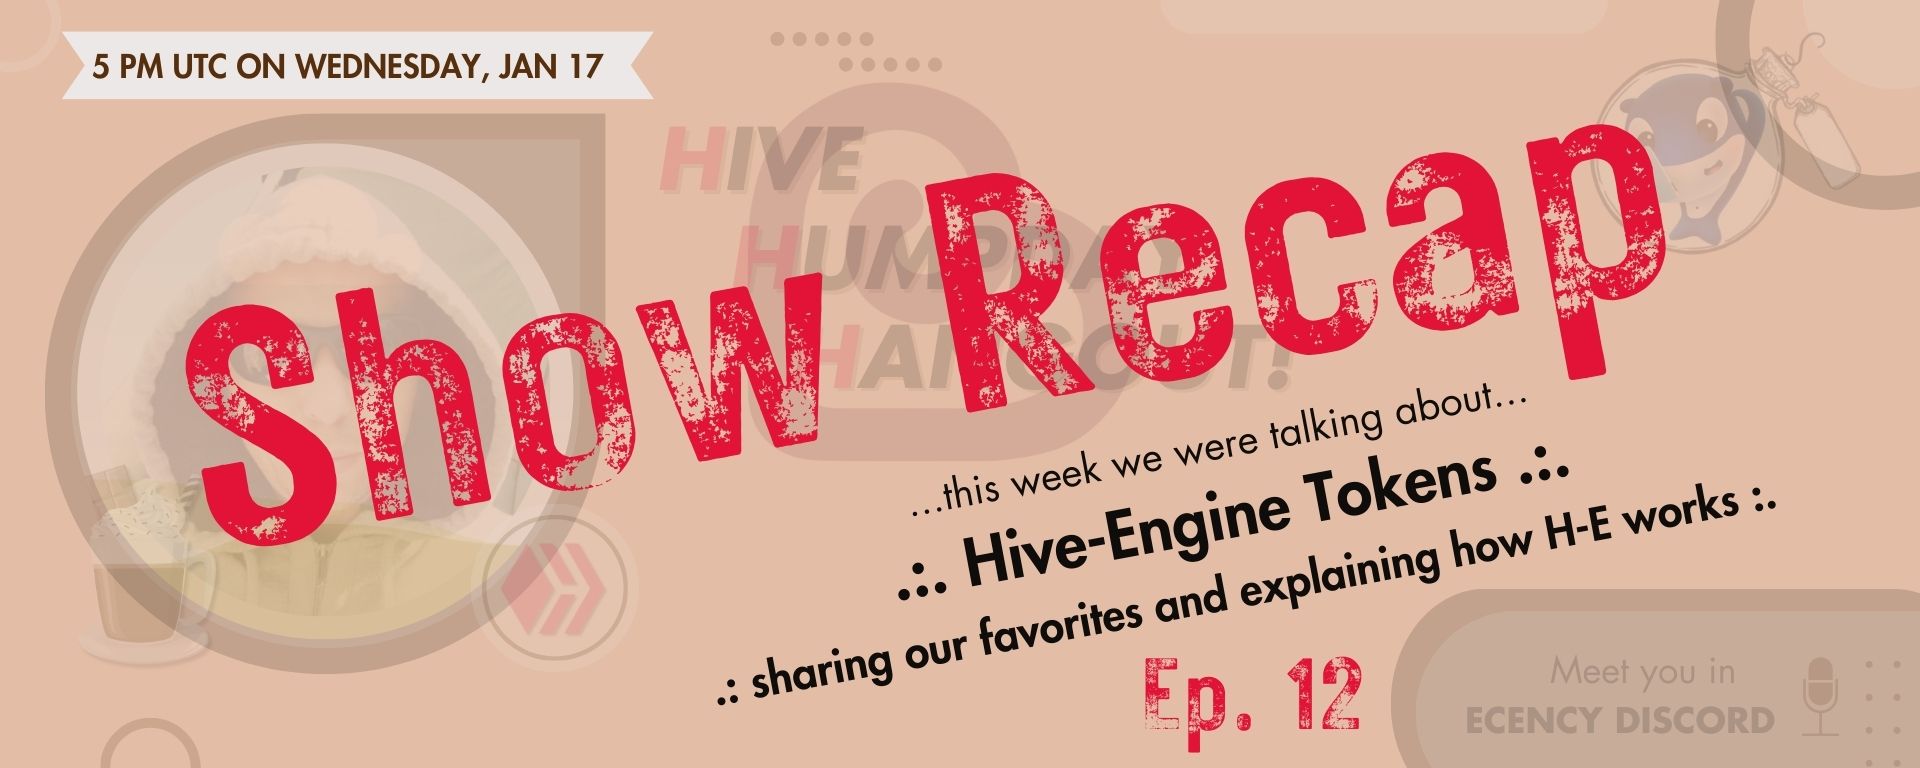 HHHLive12-Hive-EngineTokens.jpg